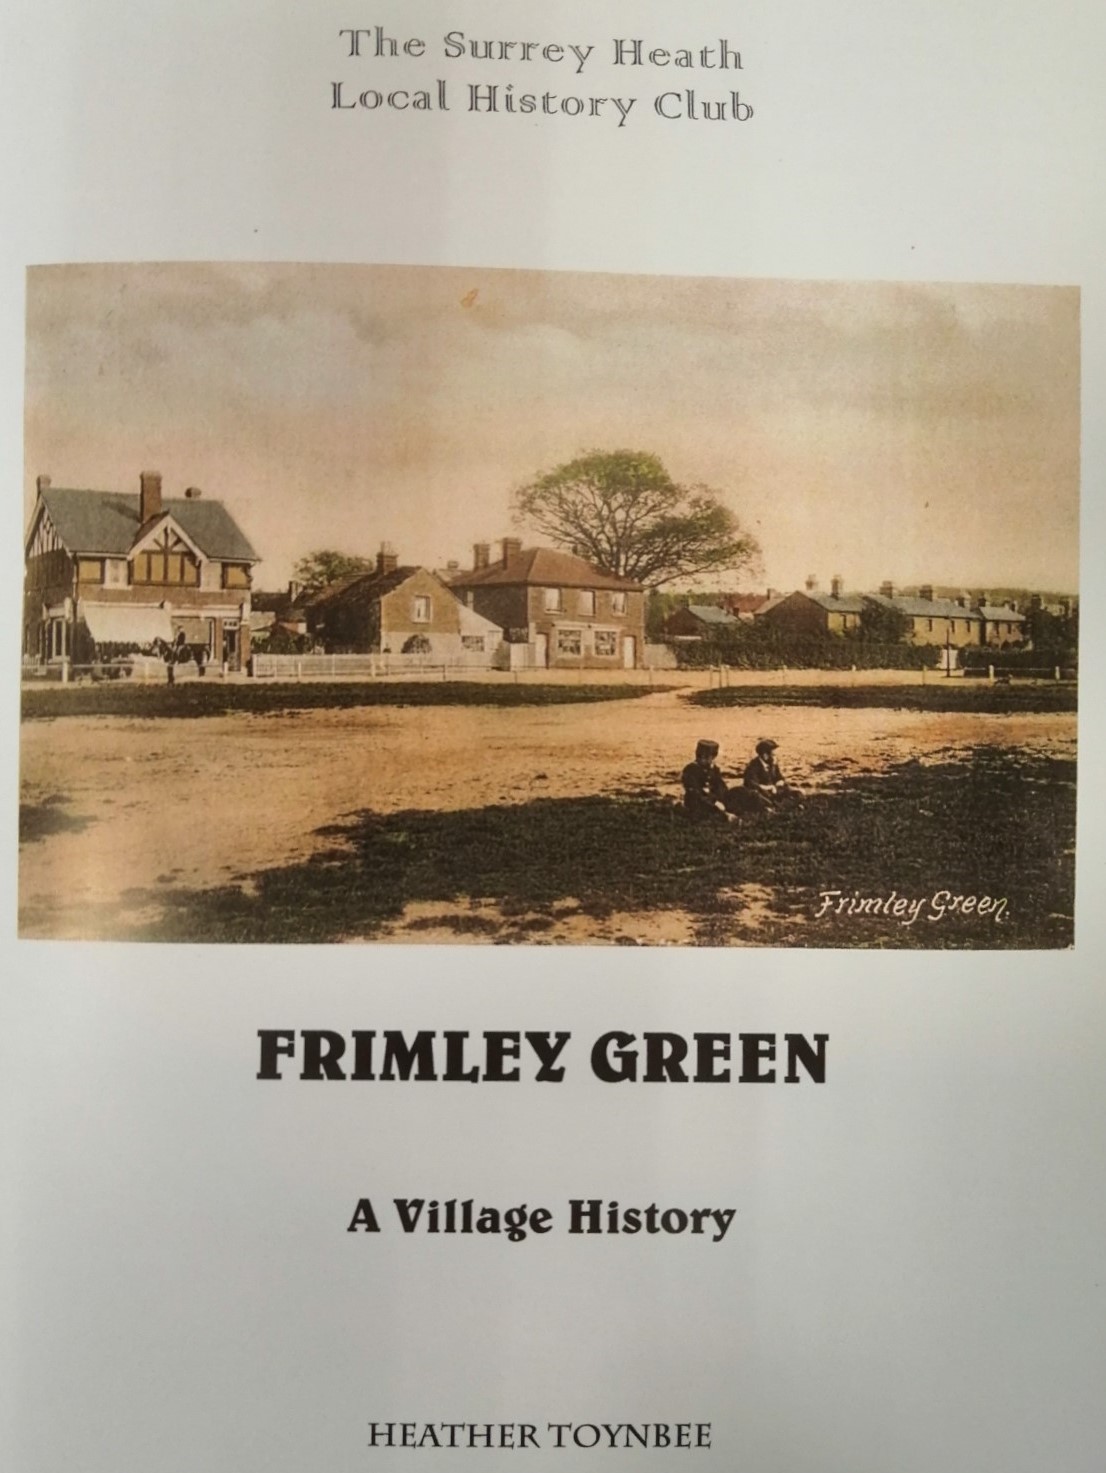 FRIMLEY GREEN A VILLAGE HISTORY